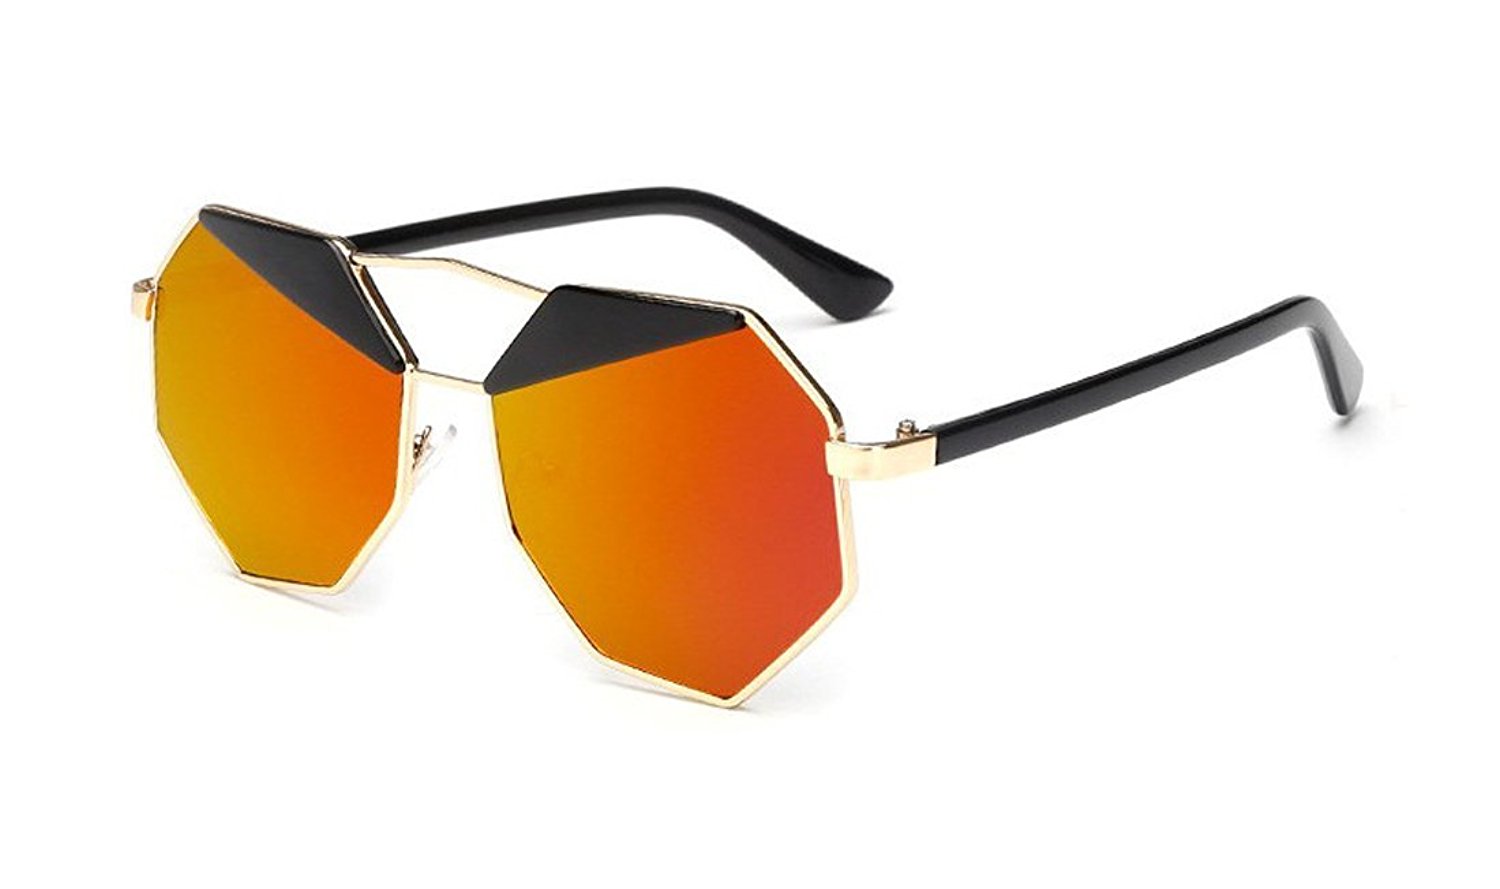 Sunglasses for Burning Man